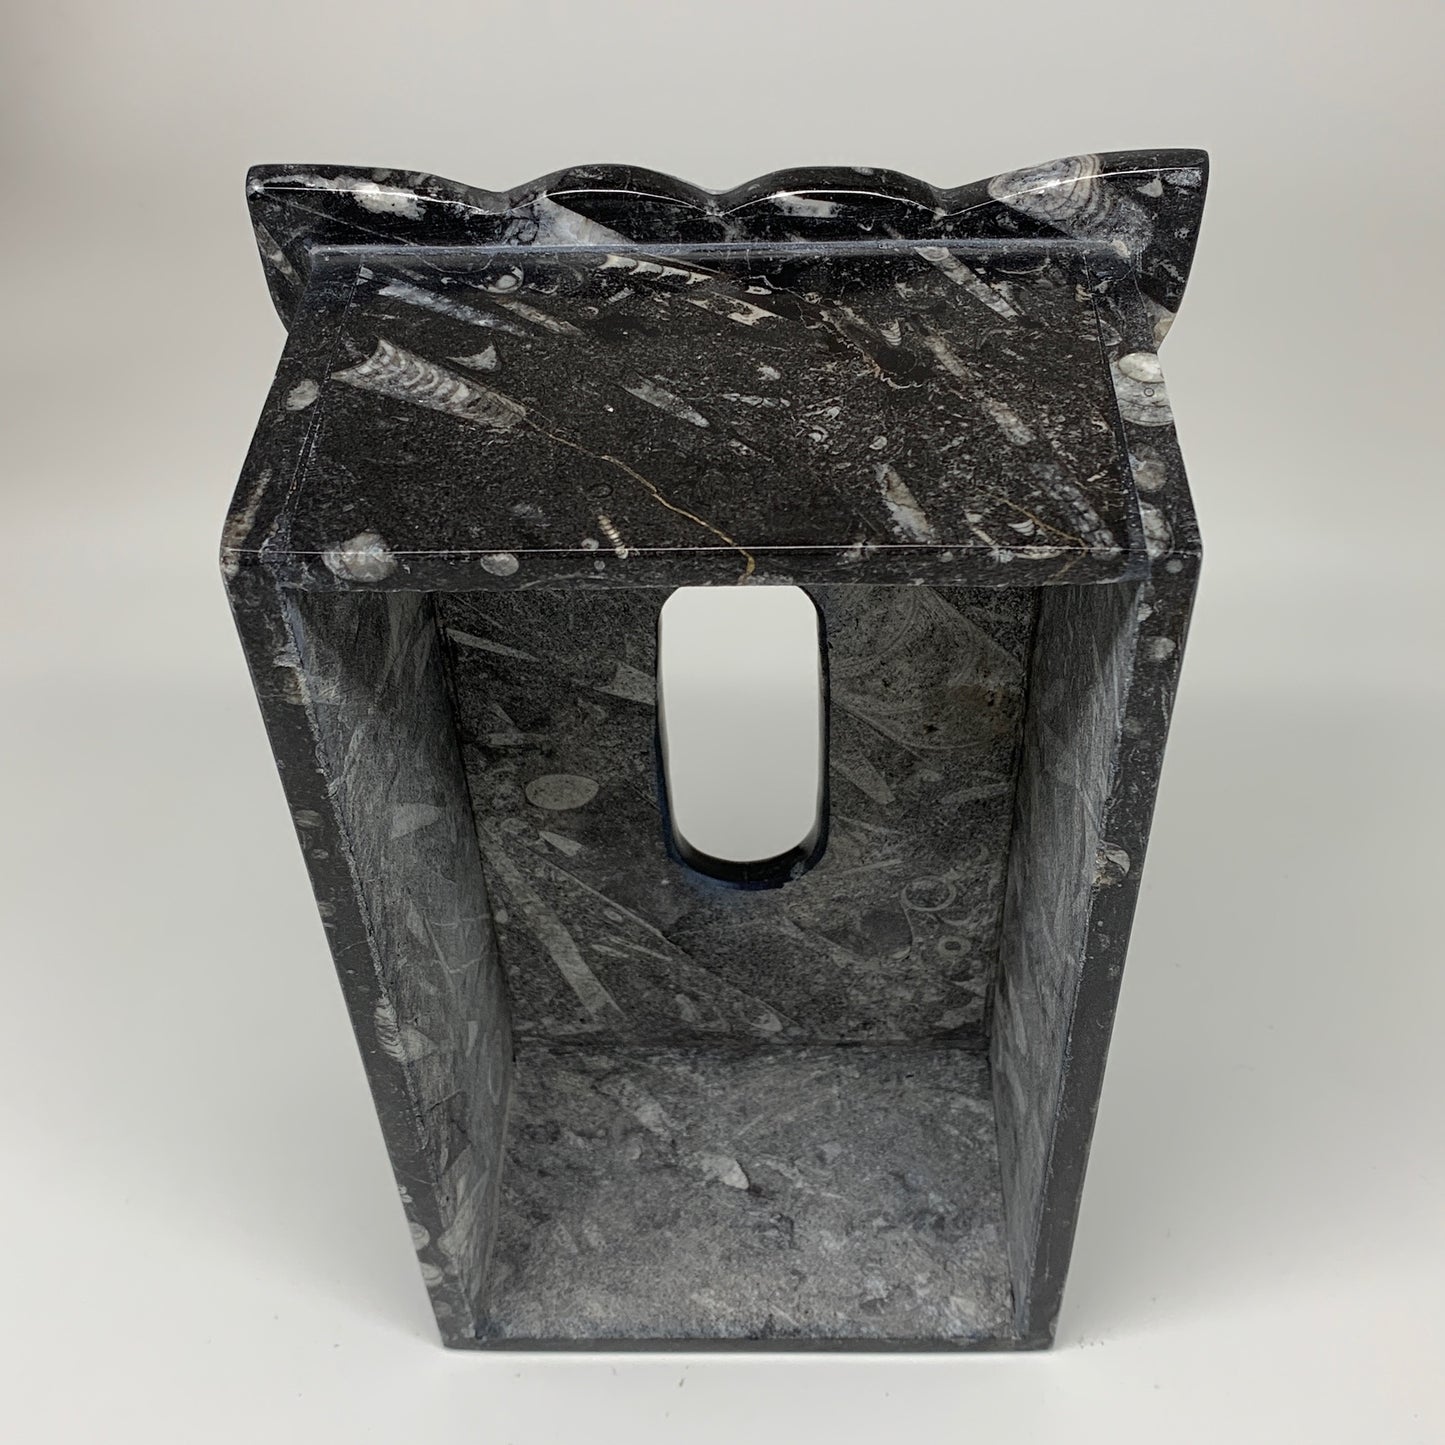 2.27kg, 10.5"x6.1" Black Fossils Orthoceras Tissue Paper Box Cover @Morocco,F446